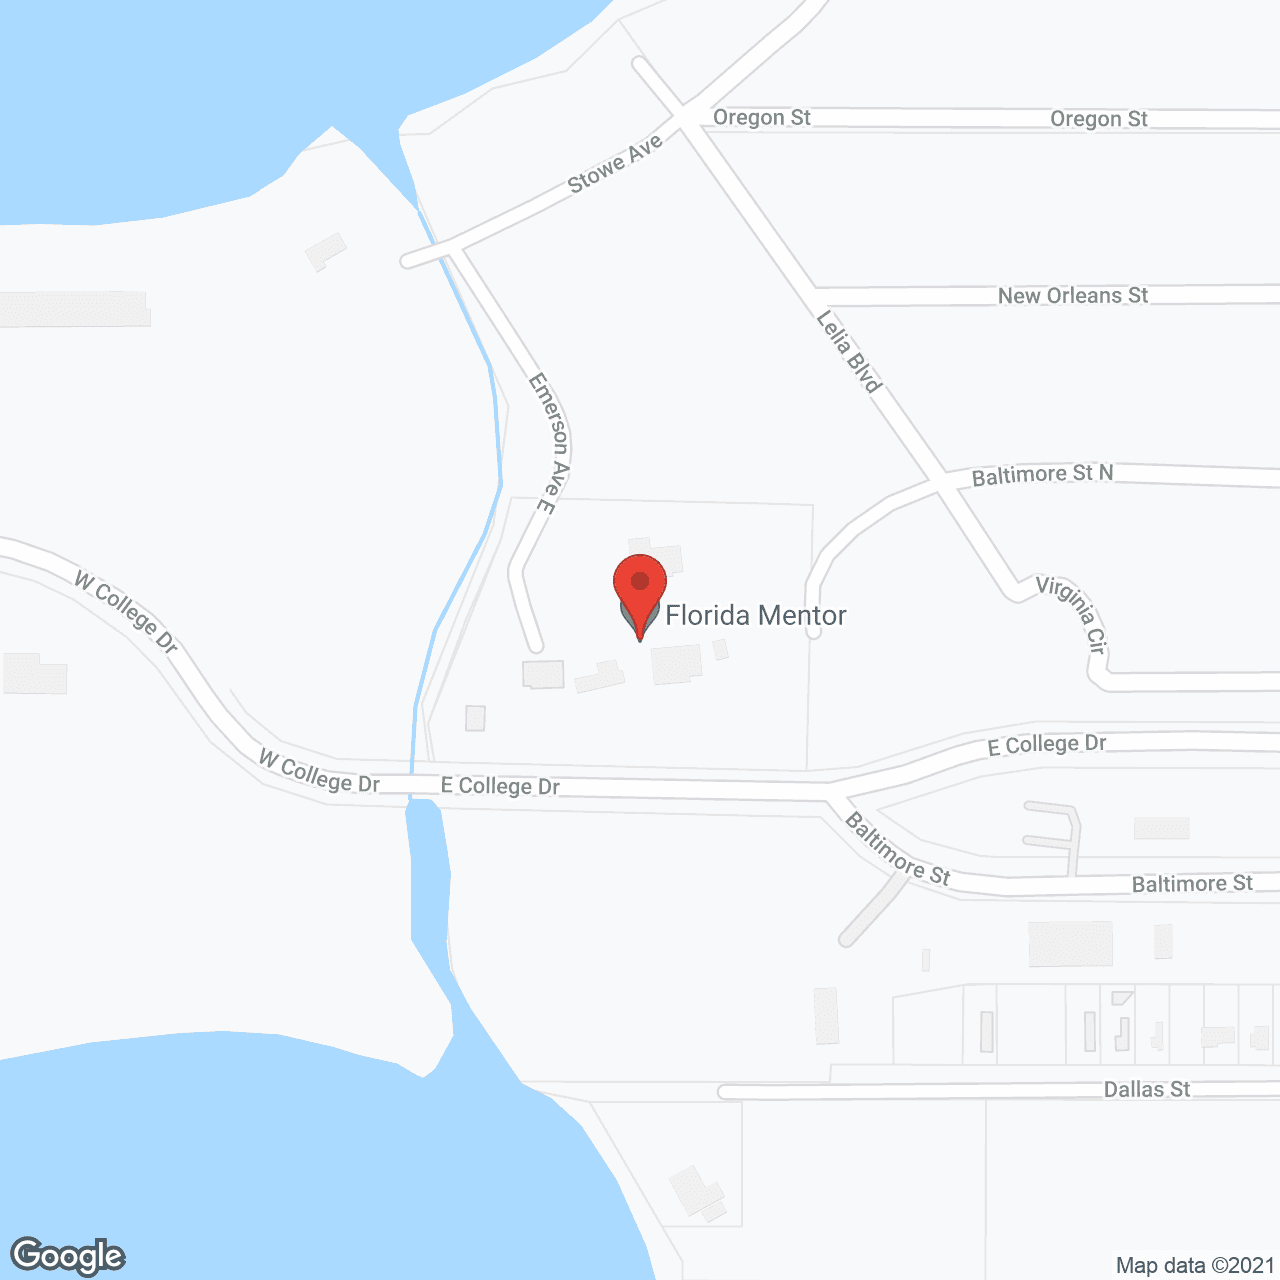 Avon Park Cluster in google map